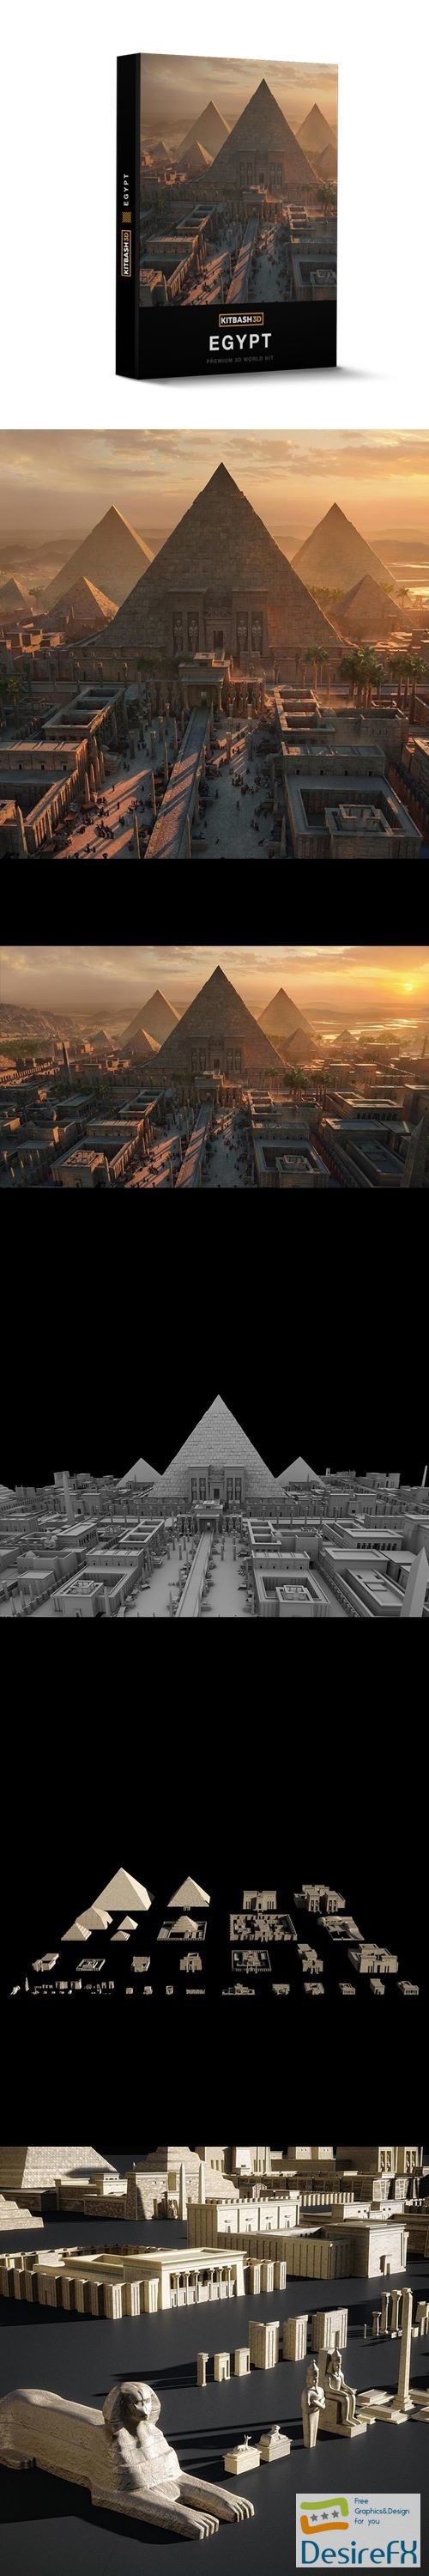 Egypt 3D Model by Kitbash3d